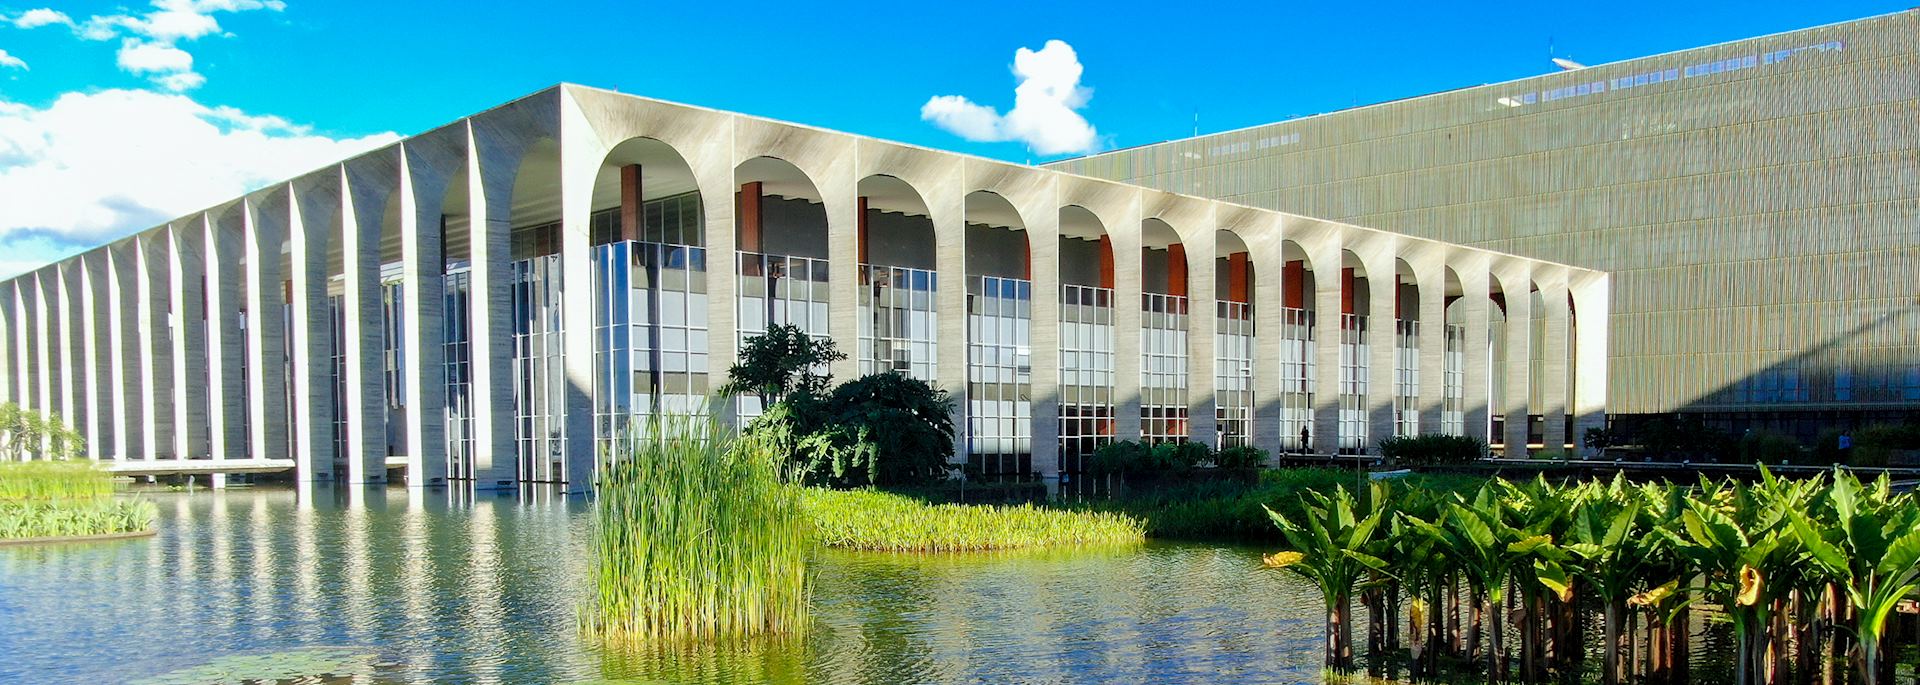 Itamaraty Palace, Brasília